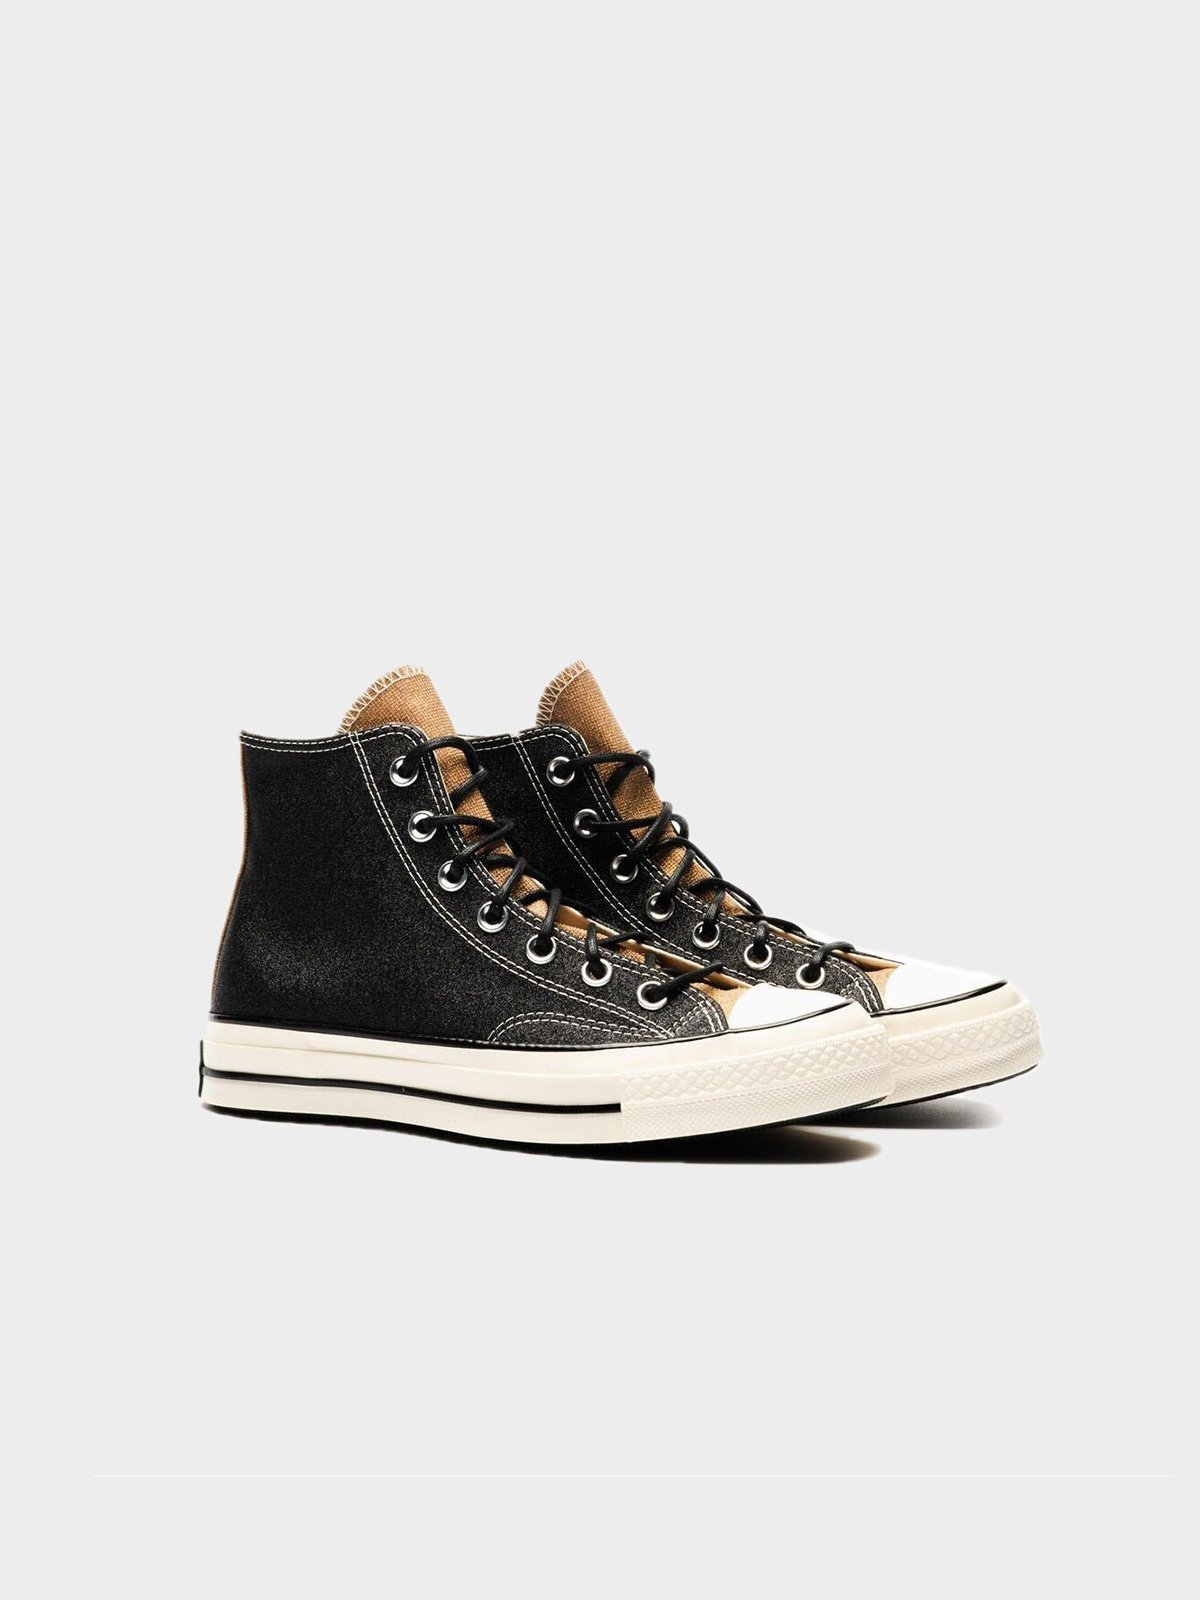 Converse Hi Chuck 70 Sneakers - Black/Gold/Egret - Pomelo Fashion